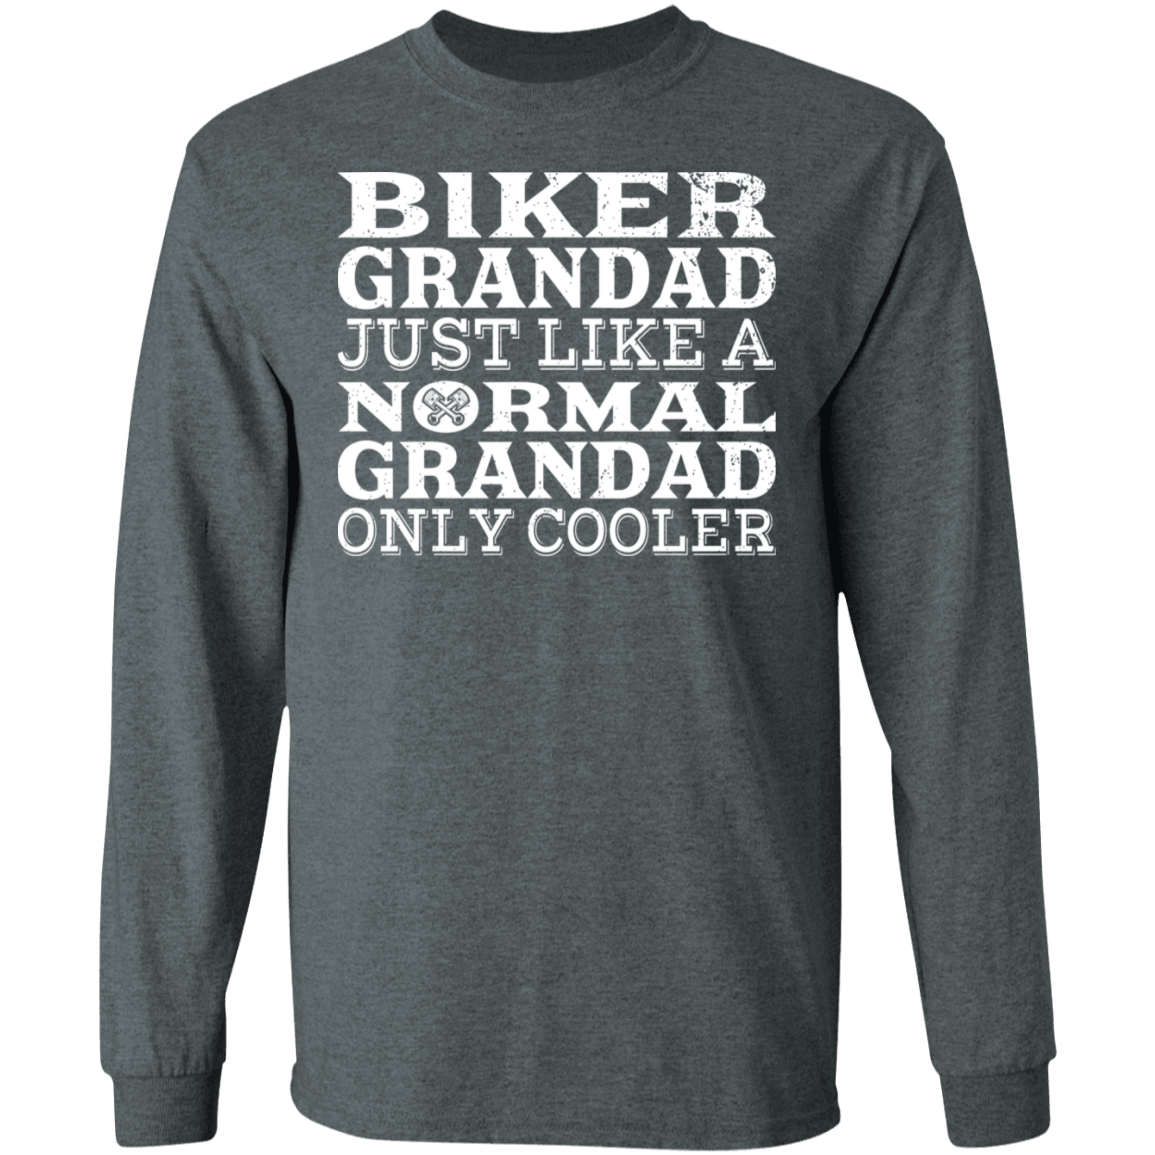 Apparel - Biker Grandad - Just Like A Normal Grandad Only Cooler